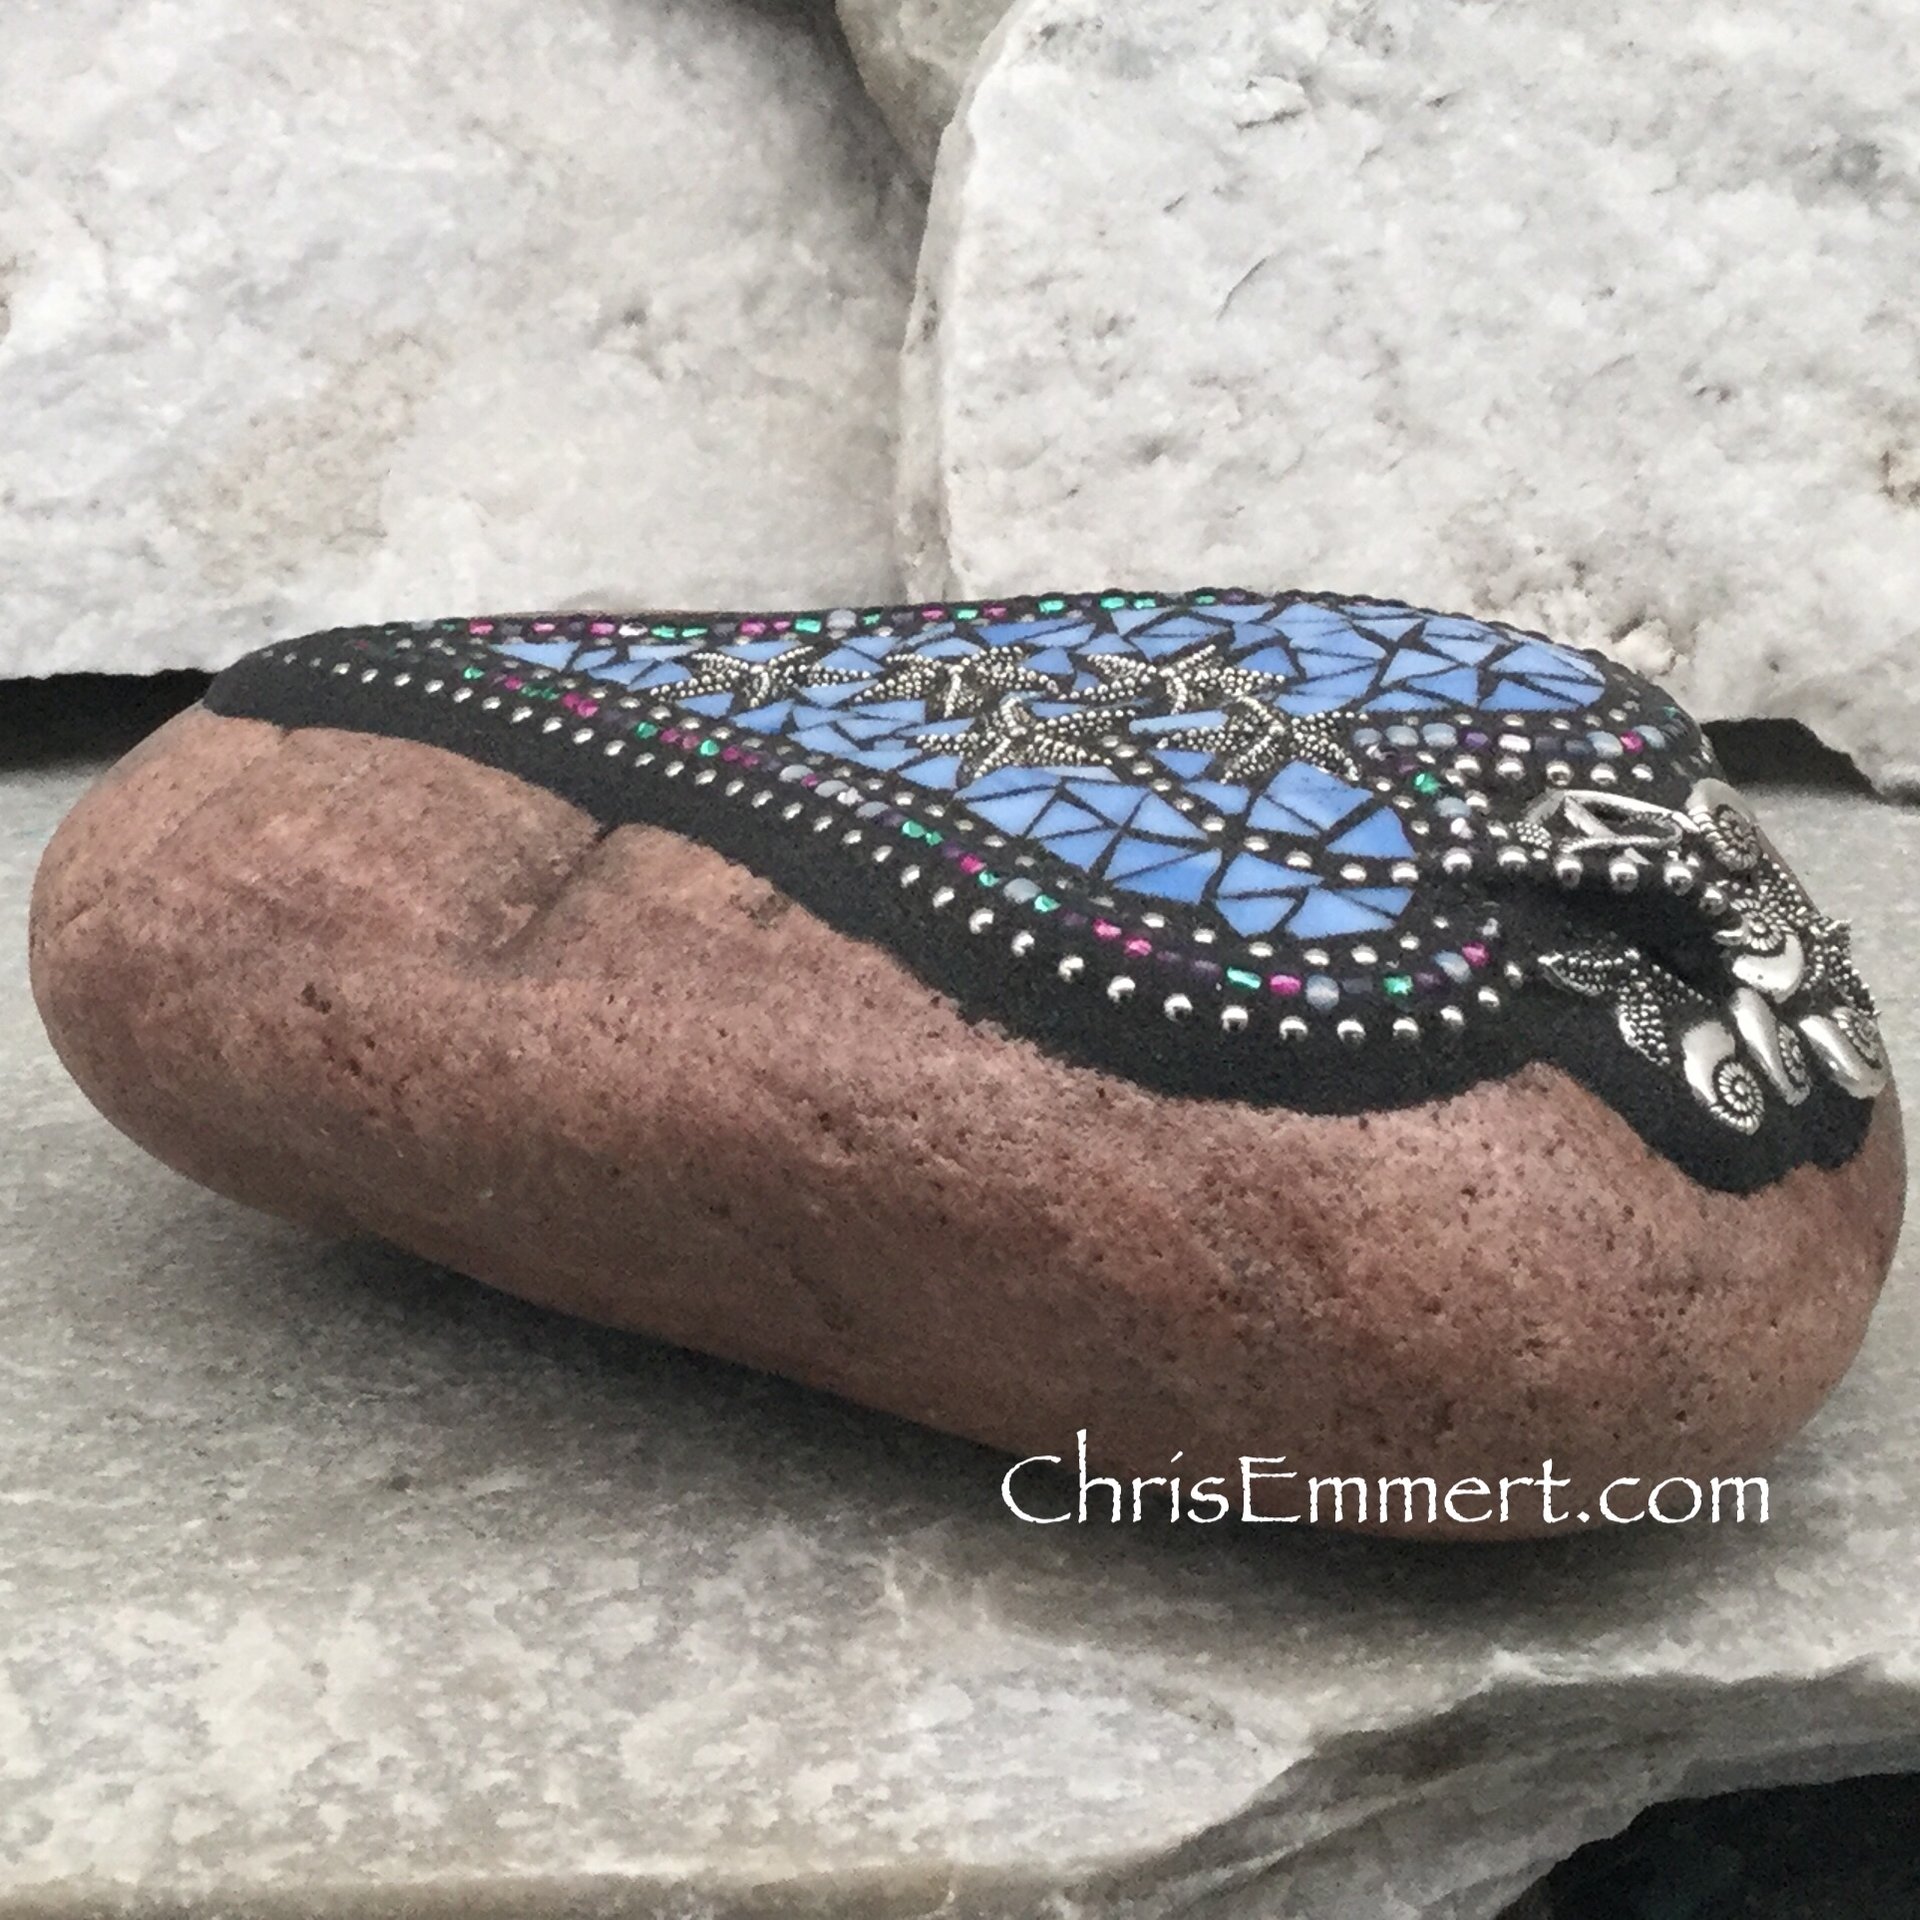 Blue Heart, Shells and Starfish, Garden Stone, Mosaic, Garden Decor